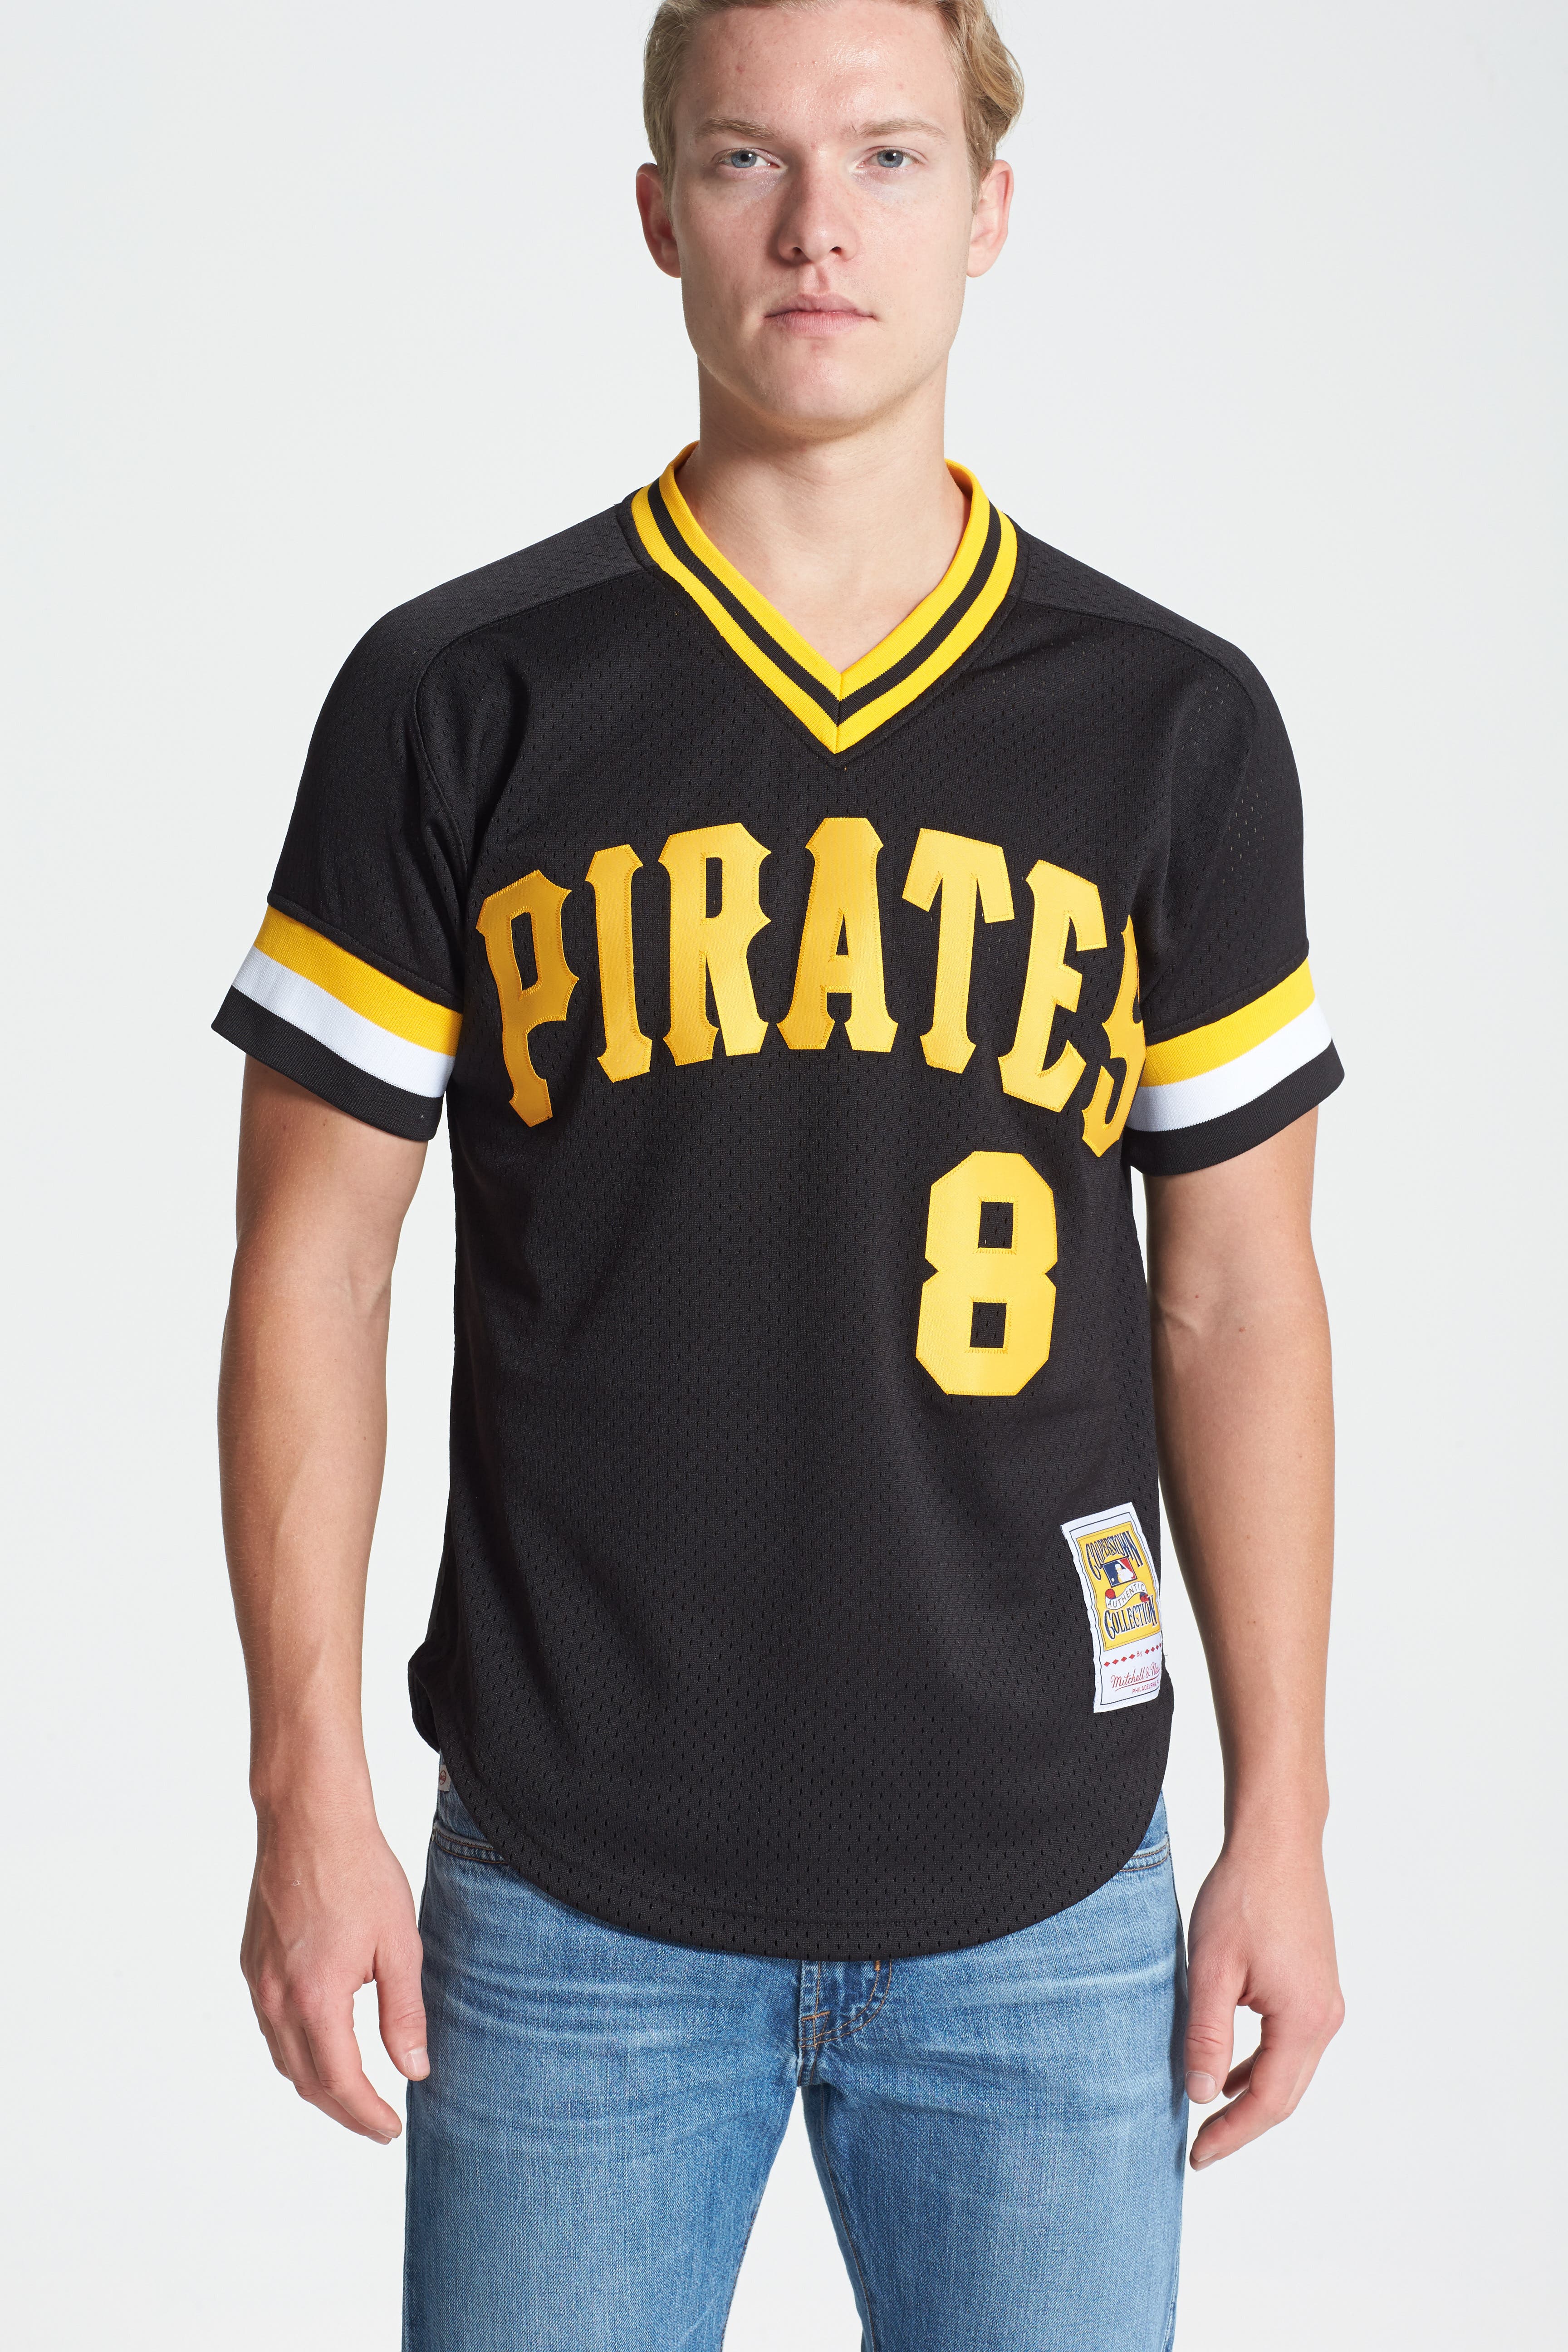 pittsburgh pirates practice jersey